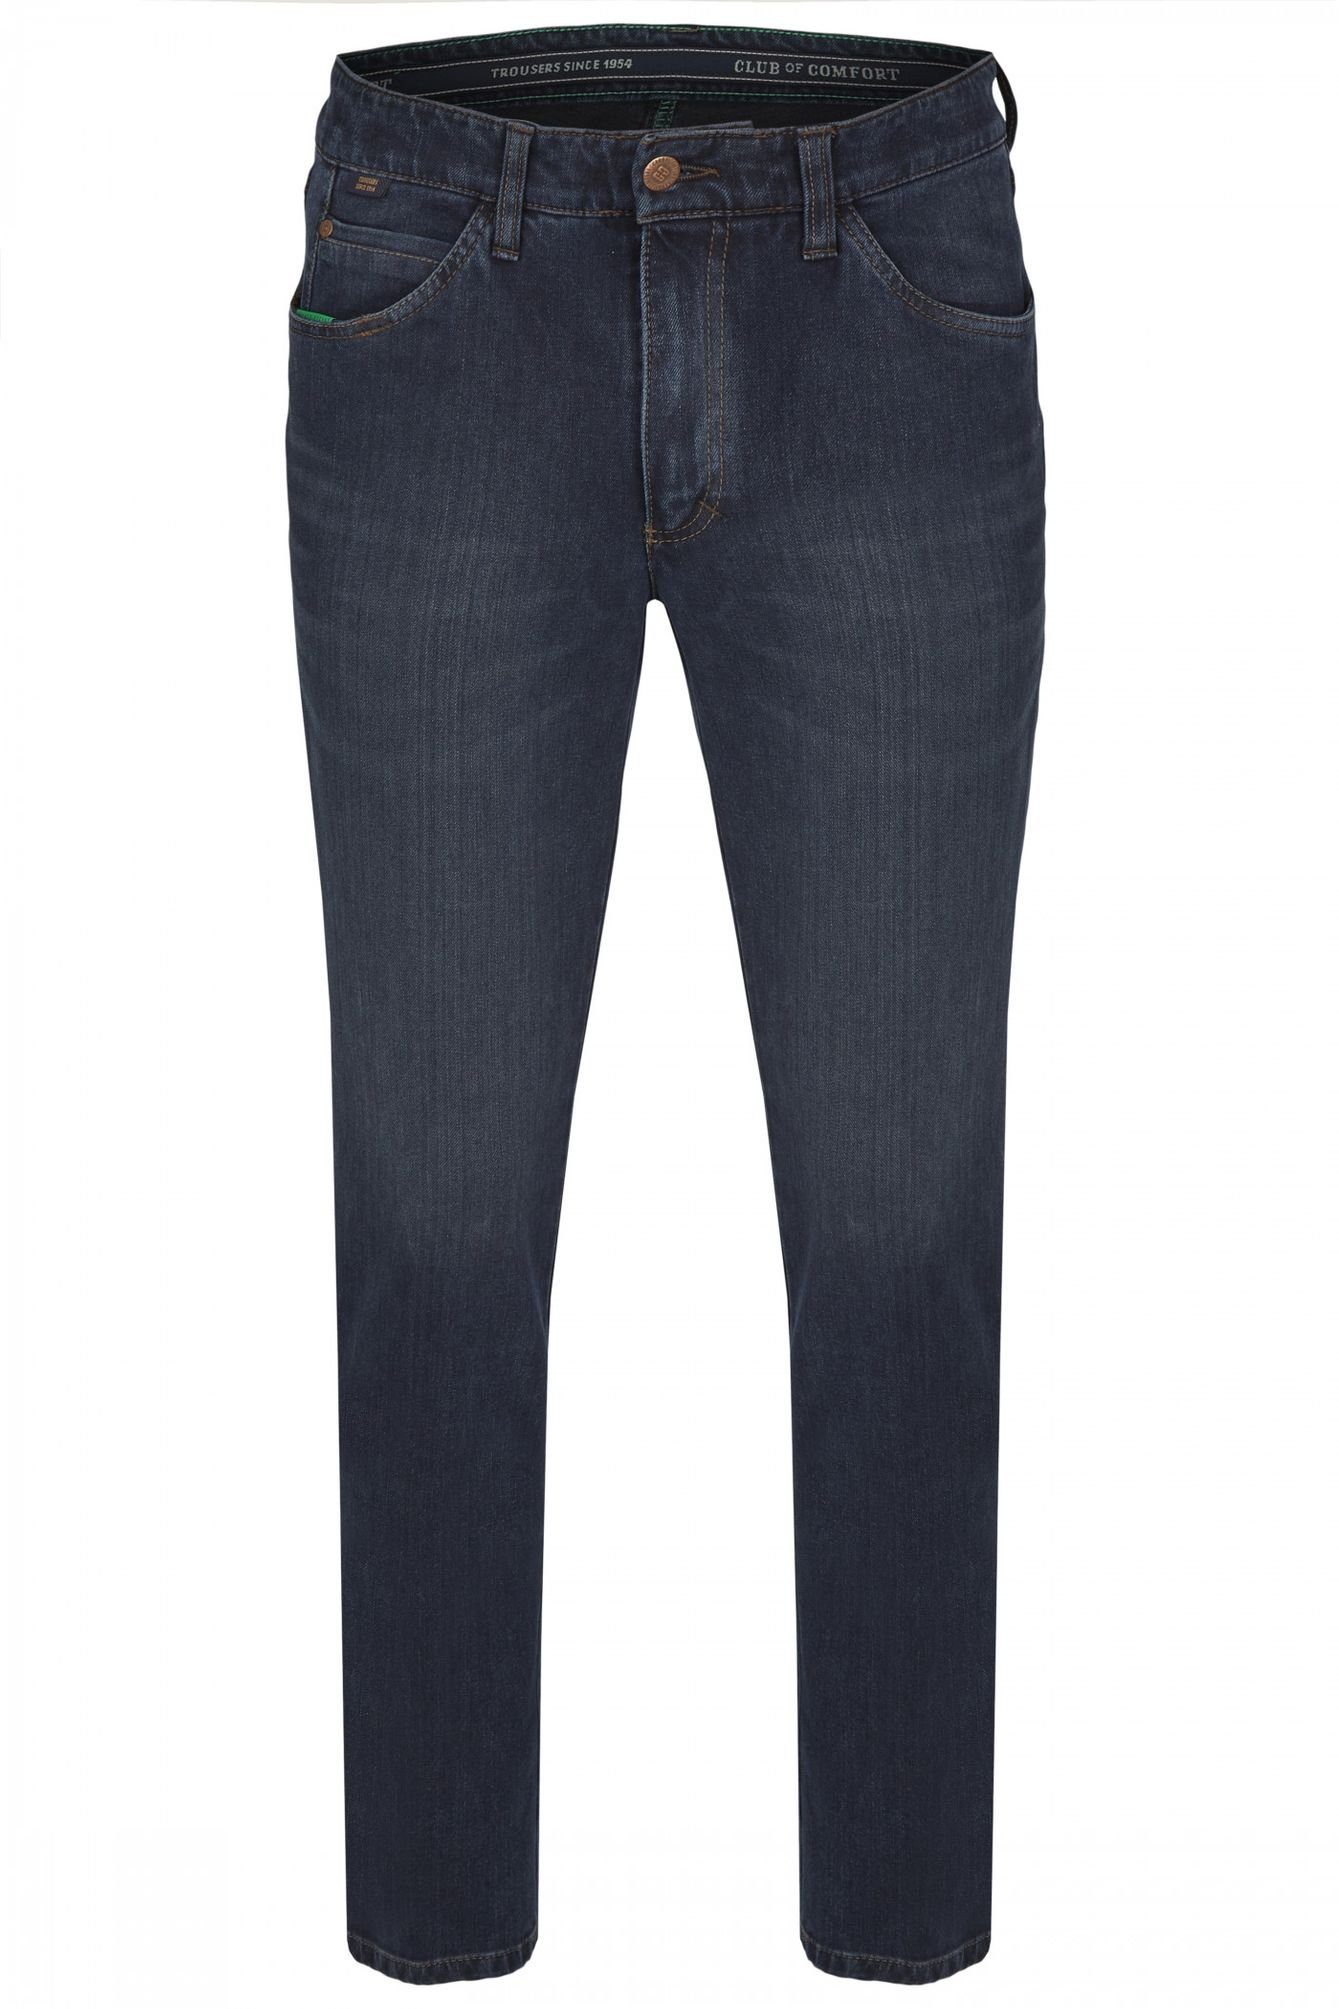 (941) Henry-X 5-Pocket-Jeans Club dunkelblau Comfort of